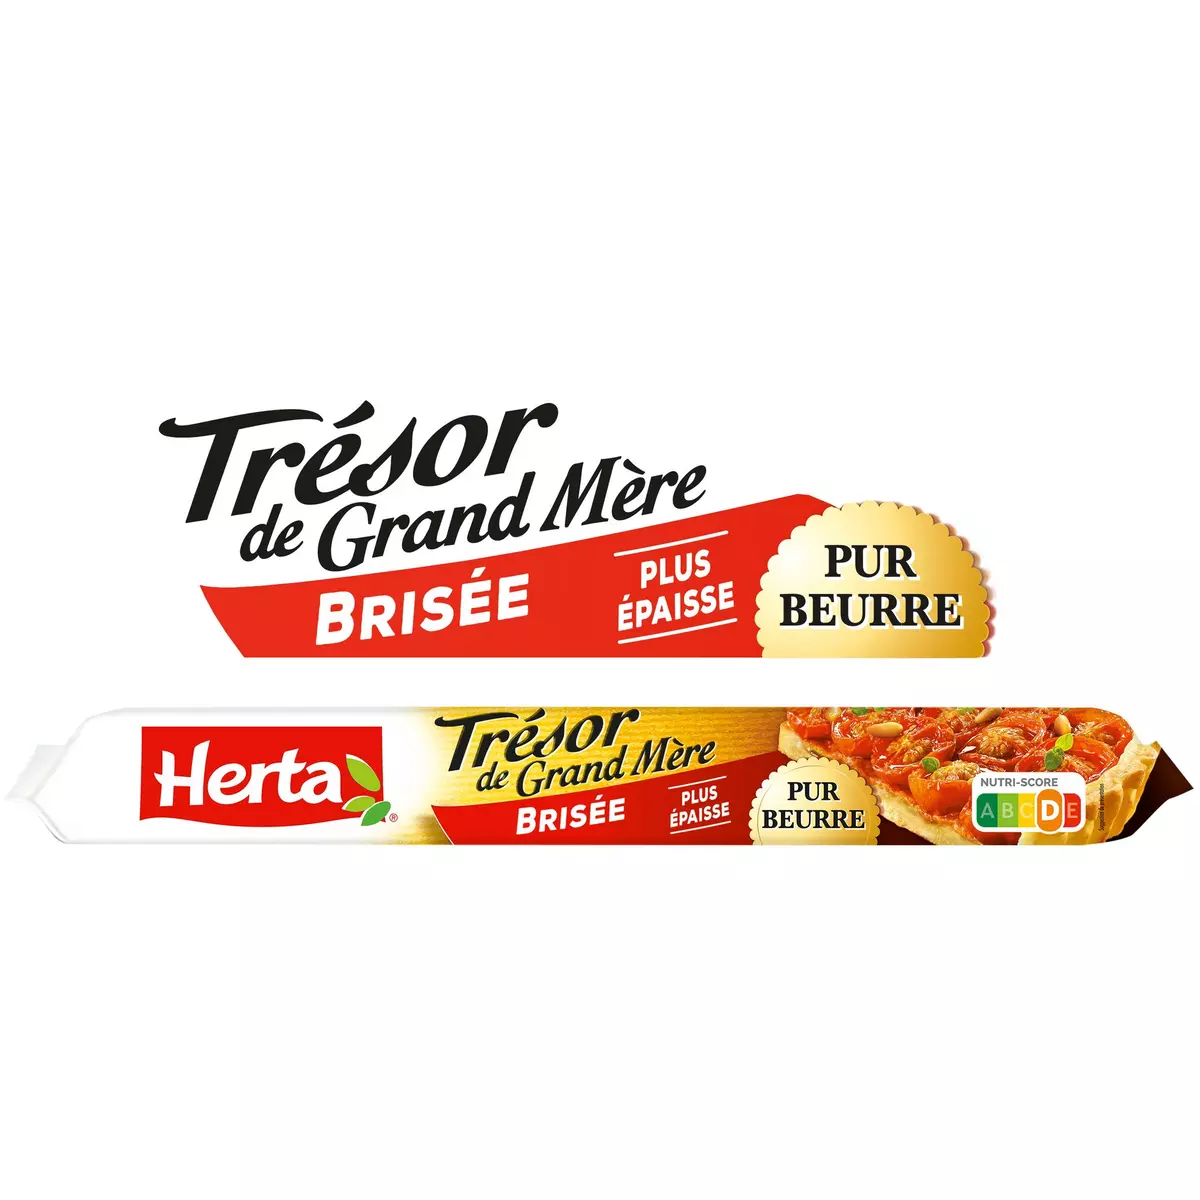 HERTA Trésor de Grand Mère pâte brisée pur beurre 280g